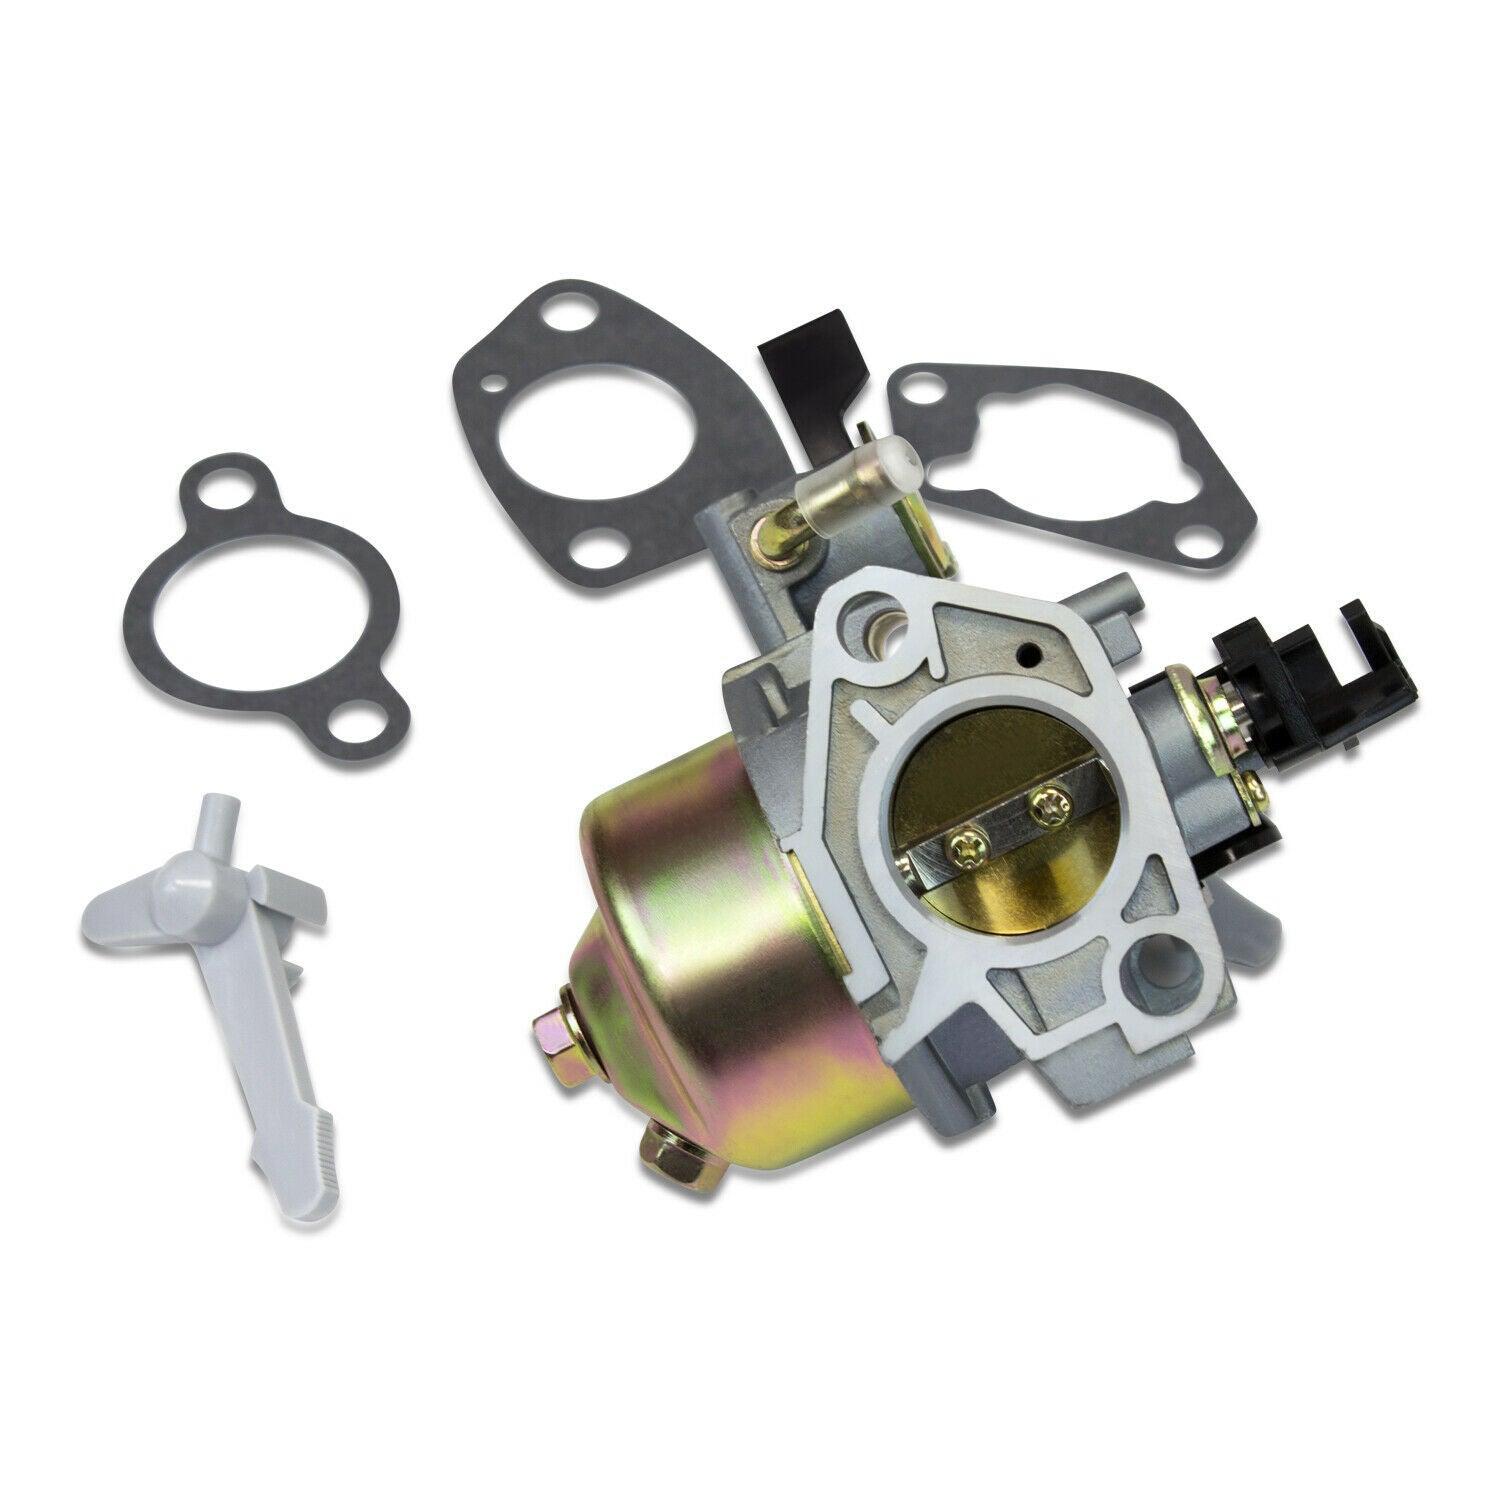  Adjustable Carburetor for Honda GX390 13HP Engine 16100-ZF6-V00  / 16100-ZF6-V01 New : Automotive